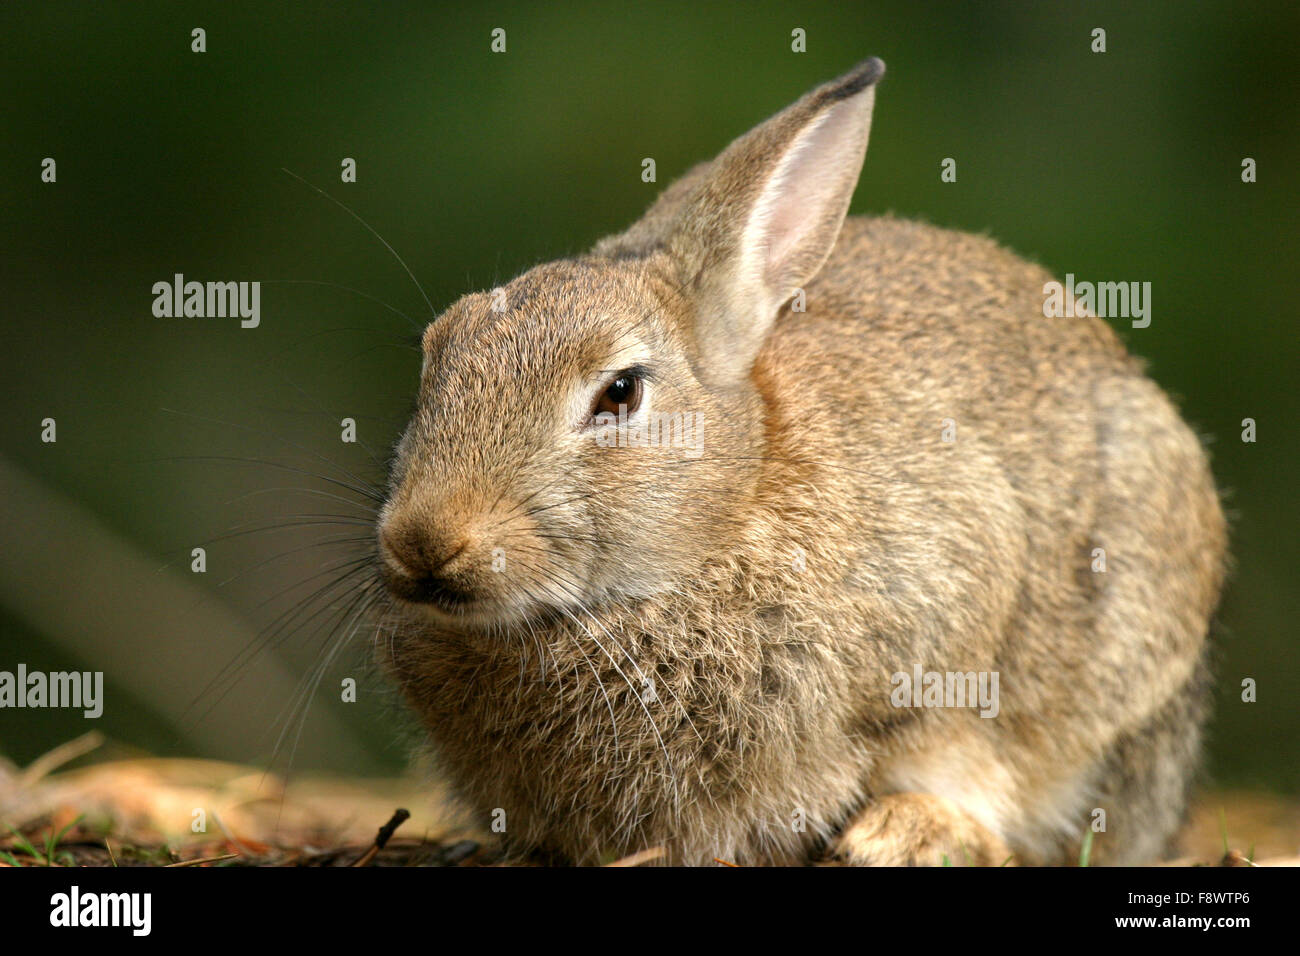 Wild Rabbit Formby Nature Reserve UK Stock Photo